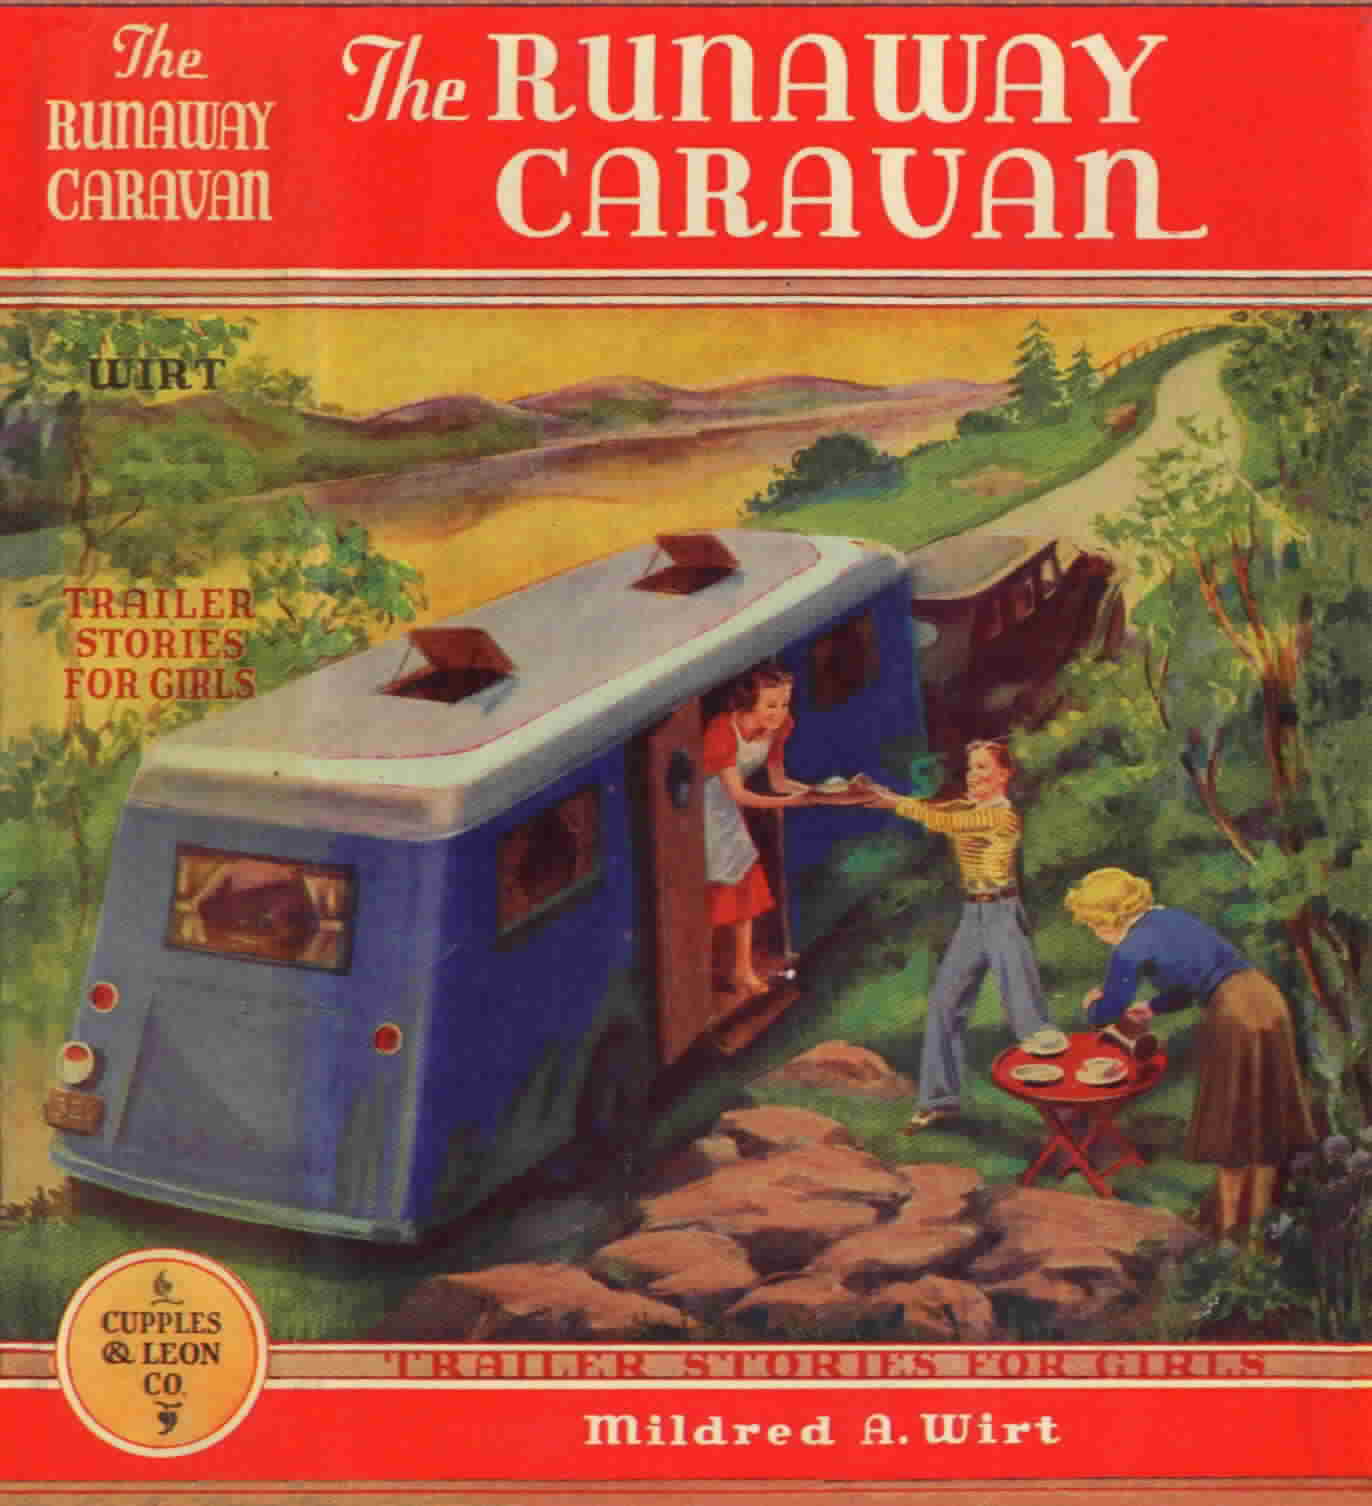 The Runaway Caravan